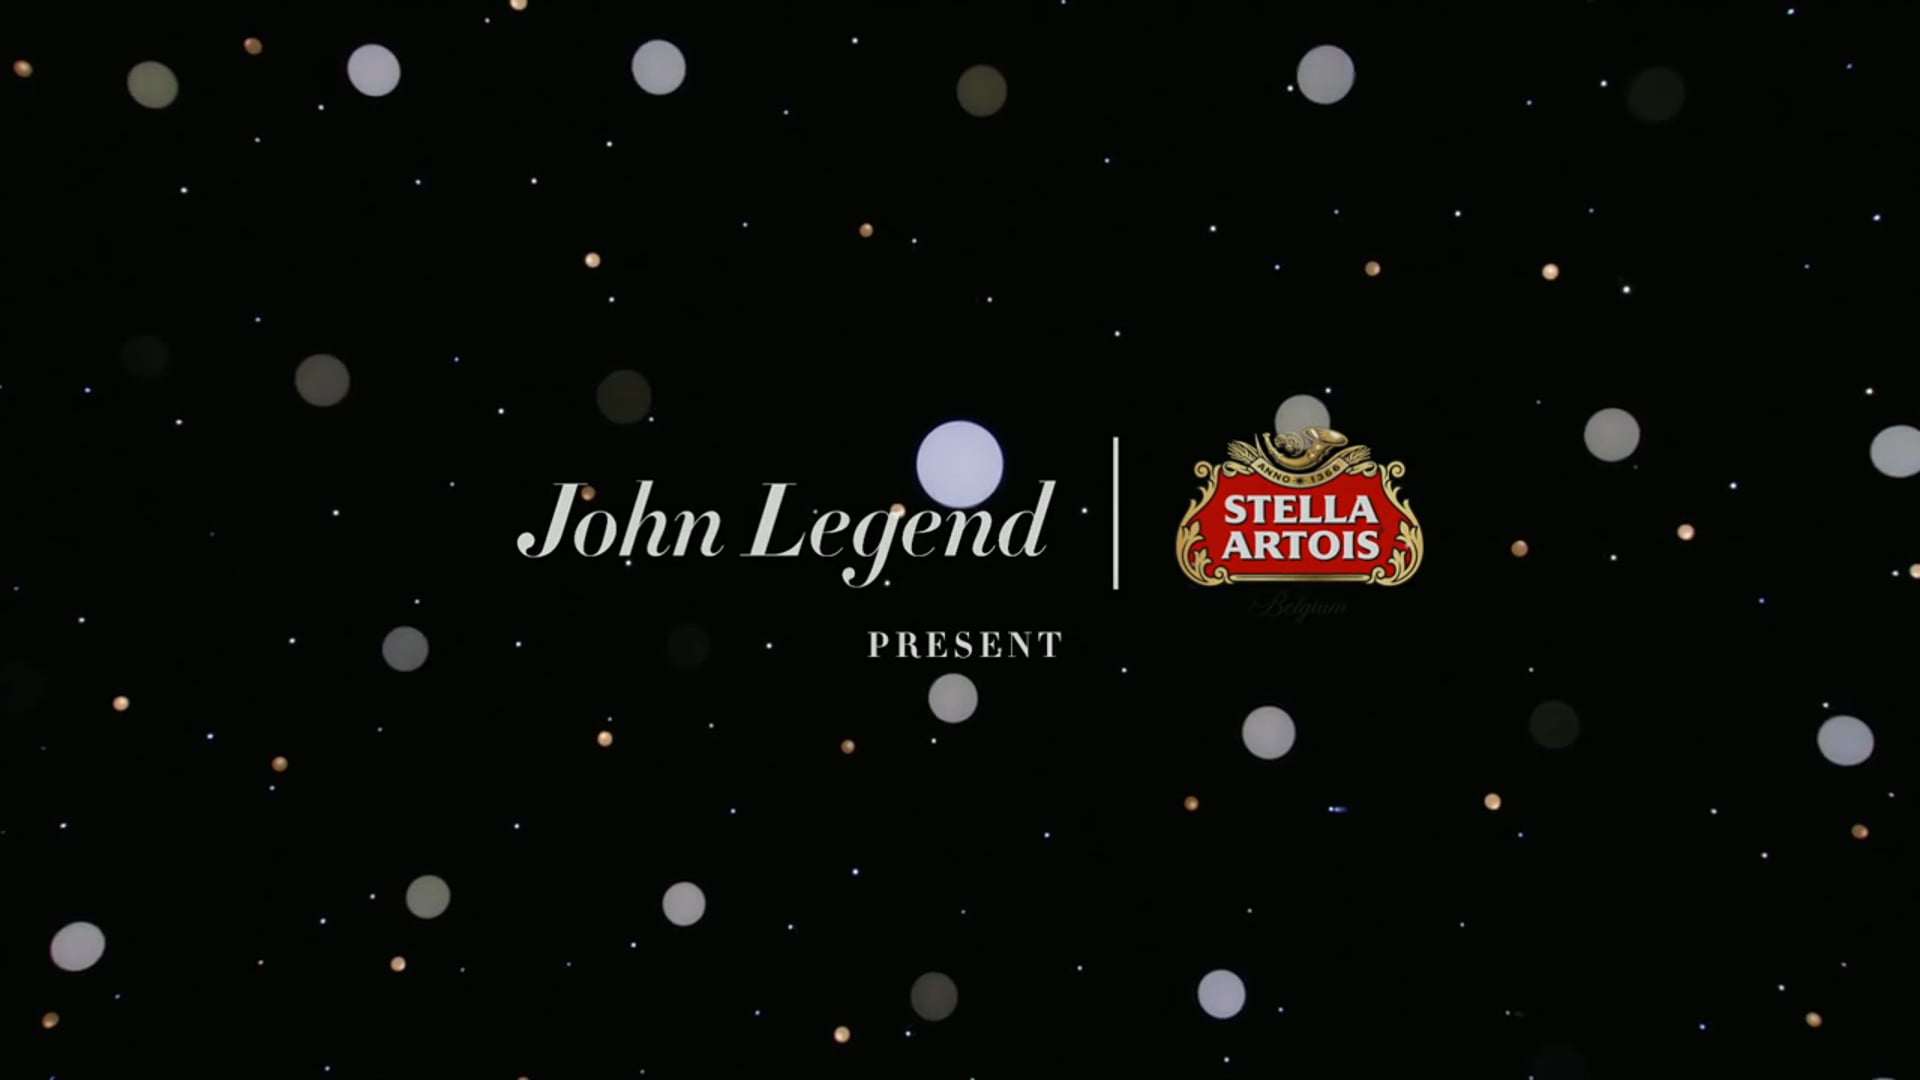 John Legend - Under The Stars (Live Performance with Stella Artois)